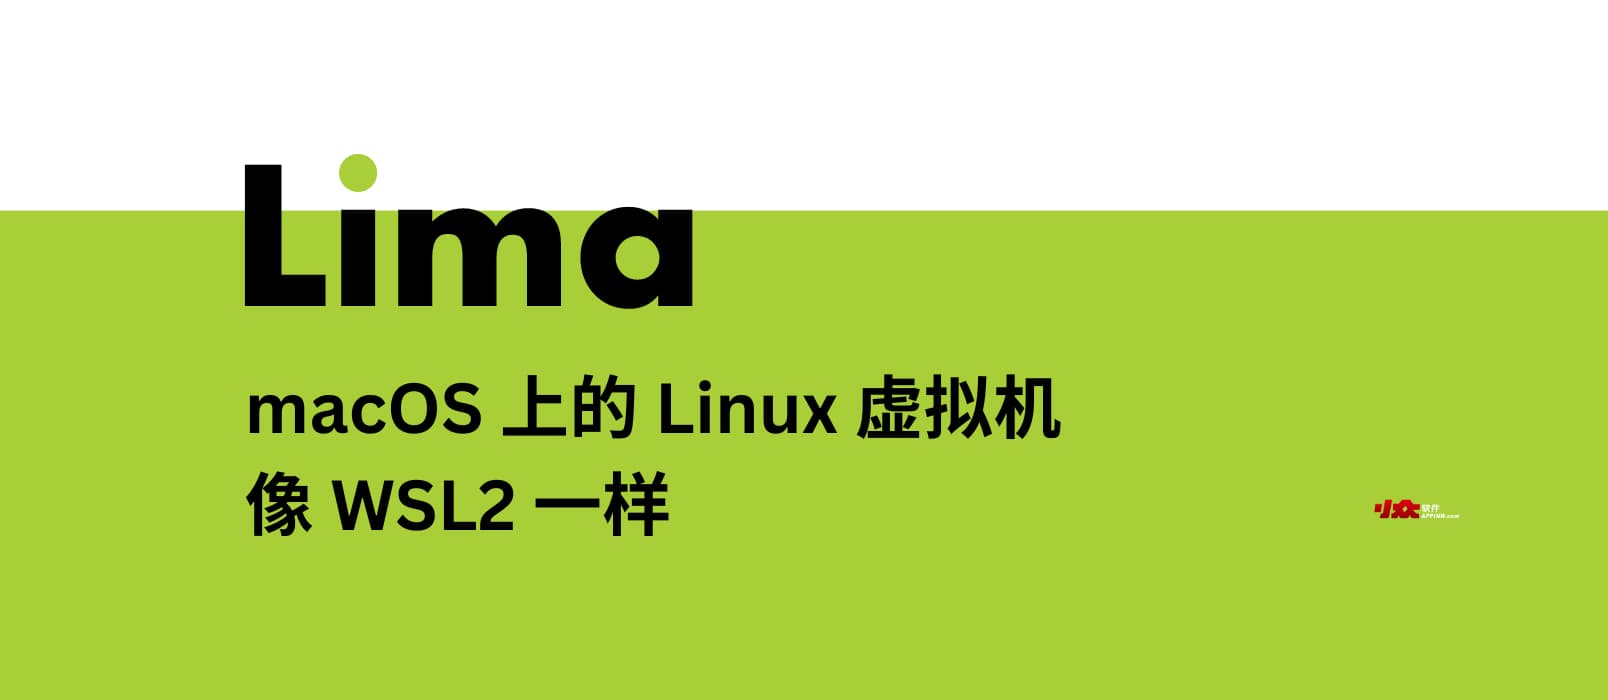 Lima – macOS 上的 Linux 虚拟机，像 WSL2 一样